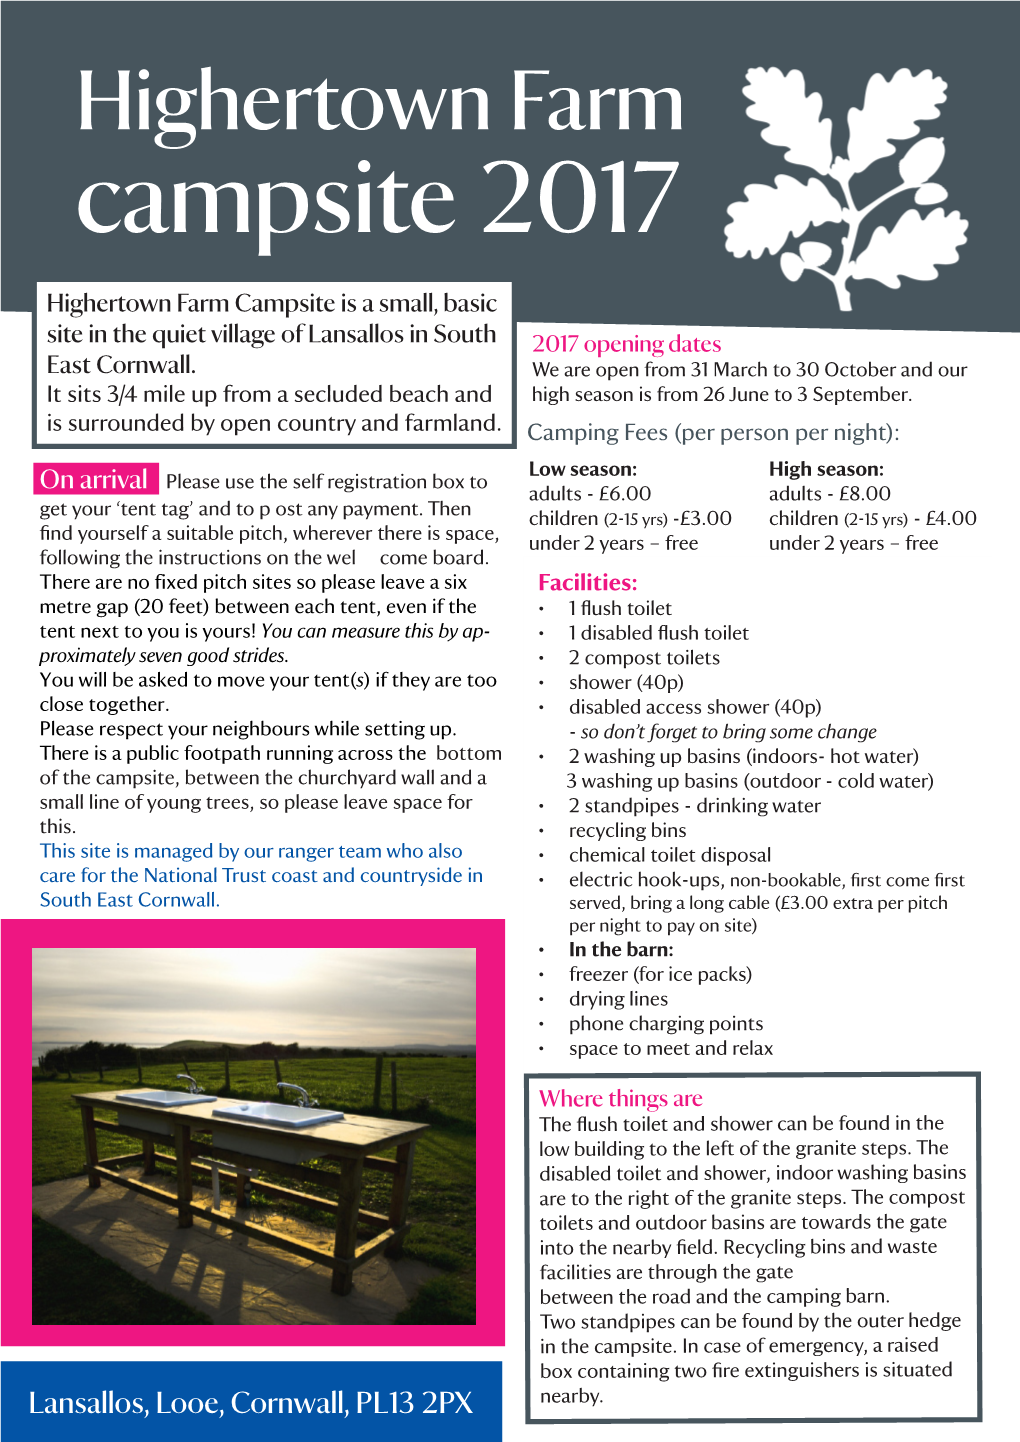 Highertown Farm Campsite 2017